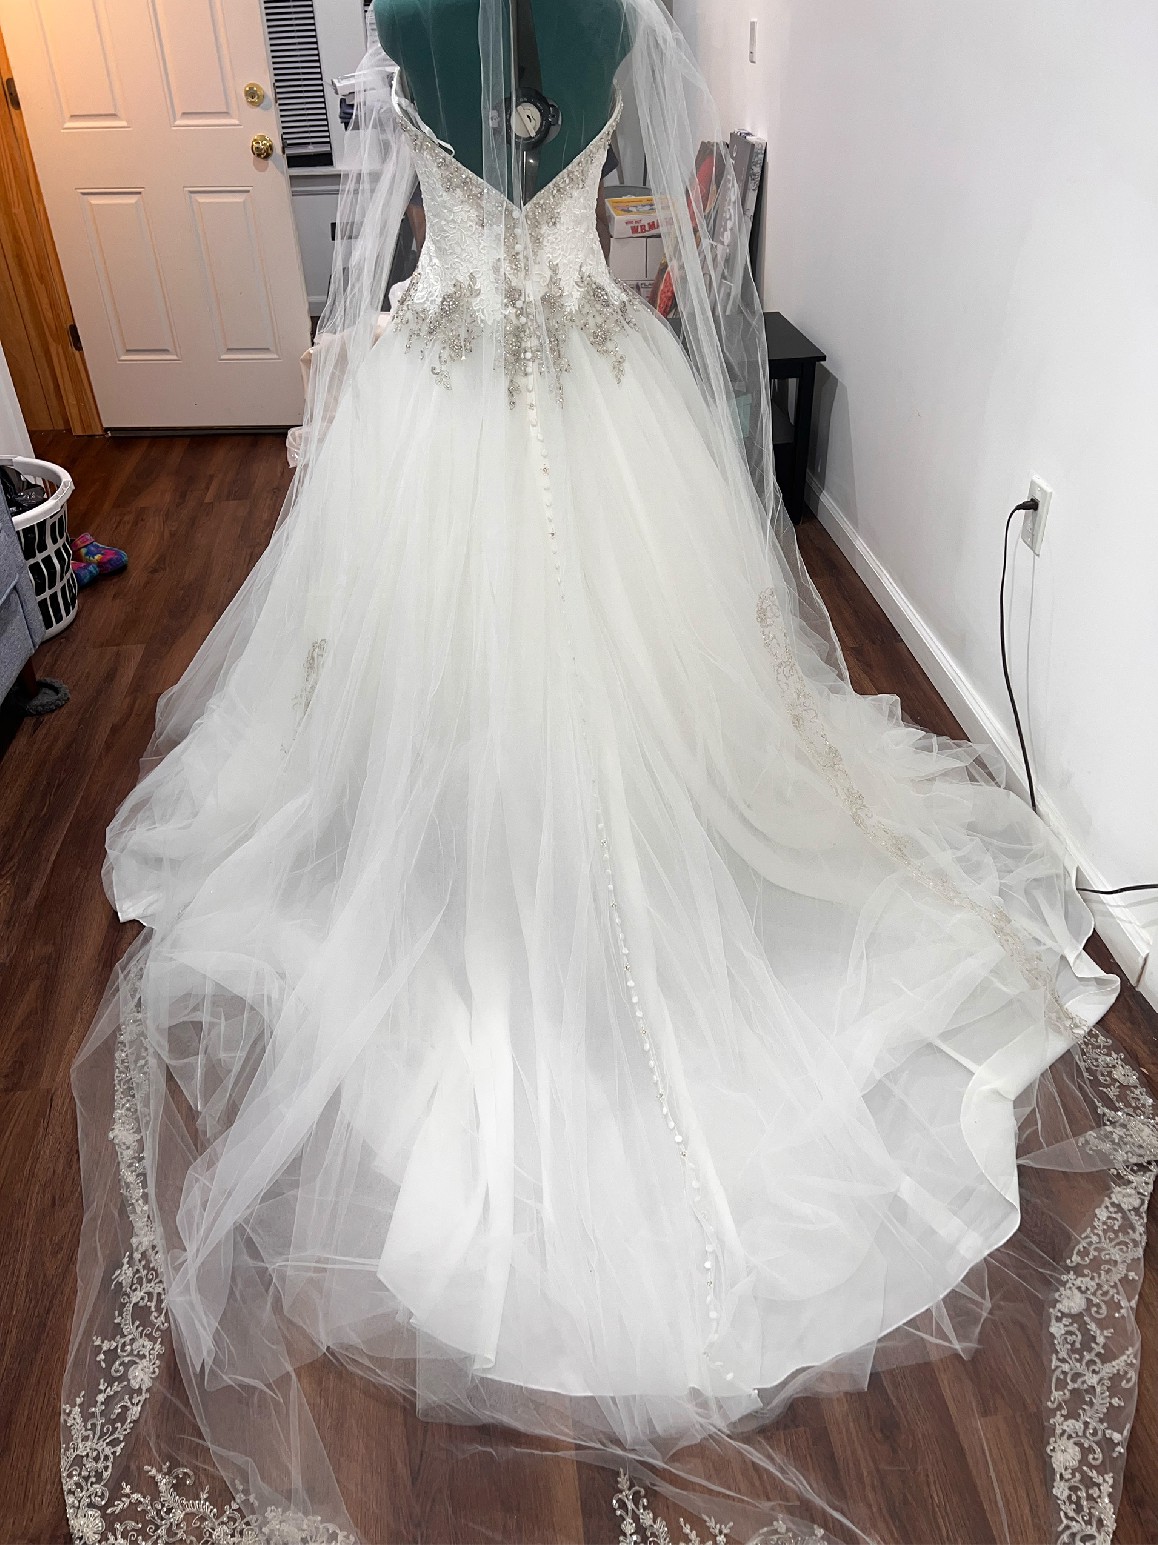 danielle caprese  Wedding dress pictures, Best wedding dresses